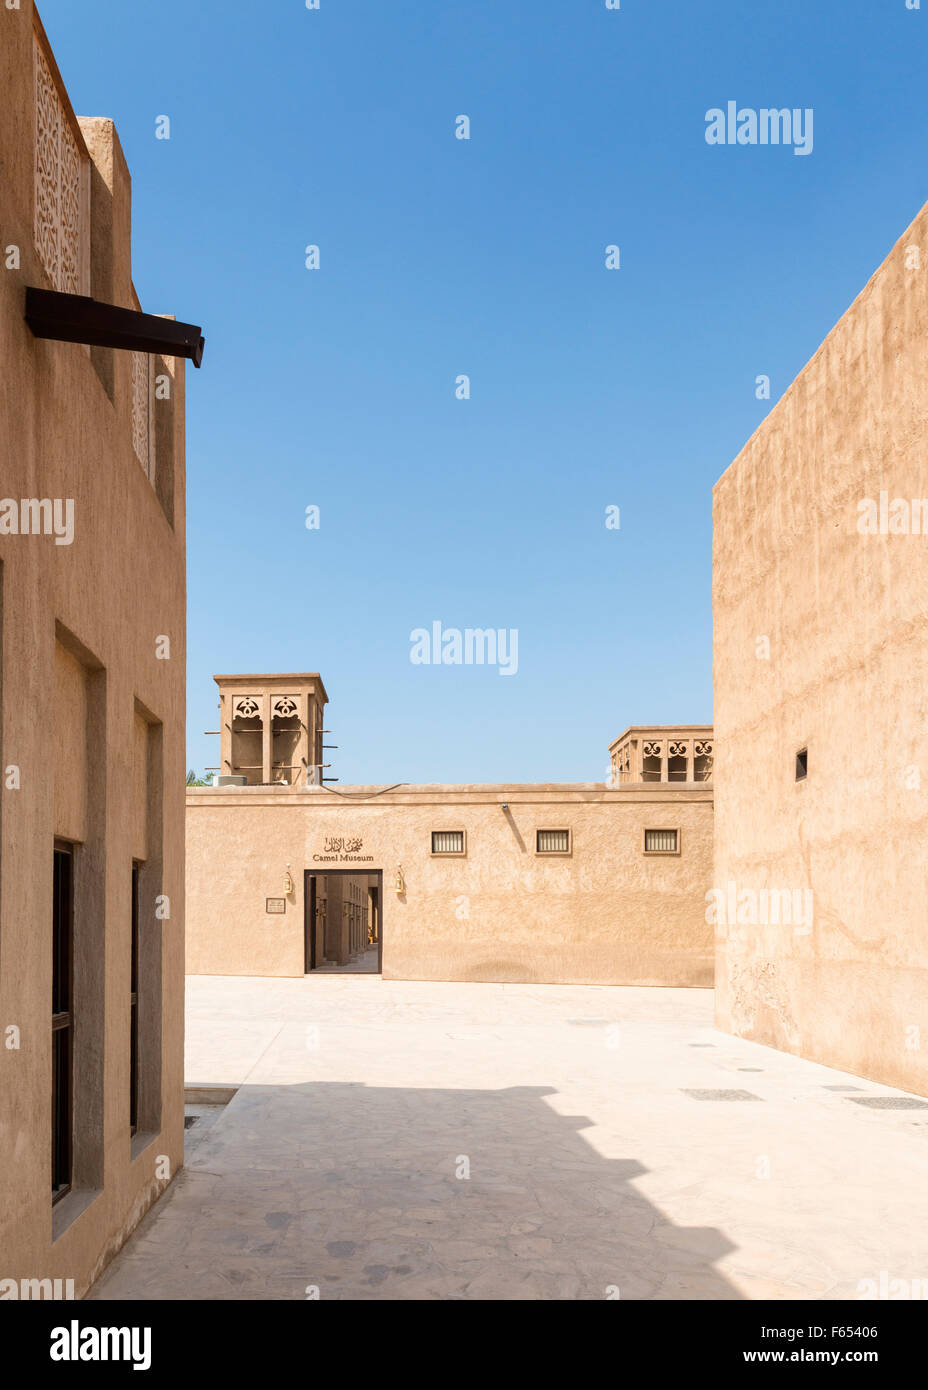 Camel musei ed edifici storici in area patrimonio al Shindagha,Dubai Emirati Arabi Uniti Foto Stock